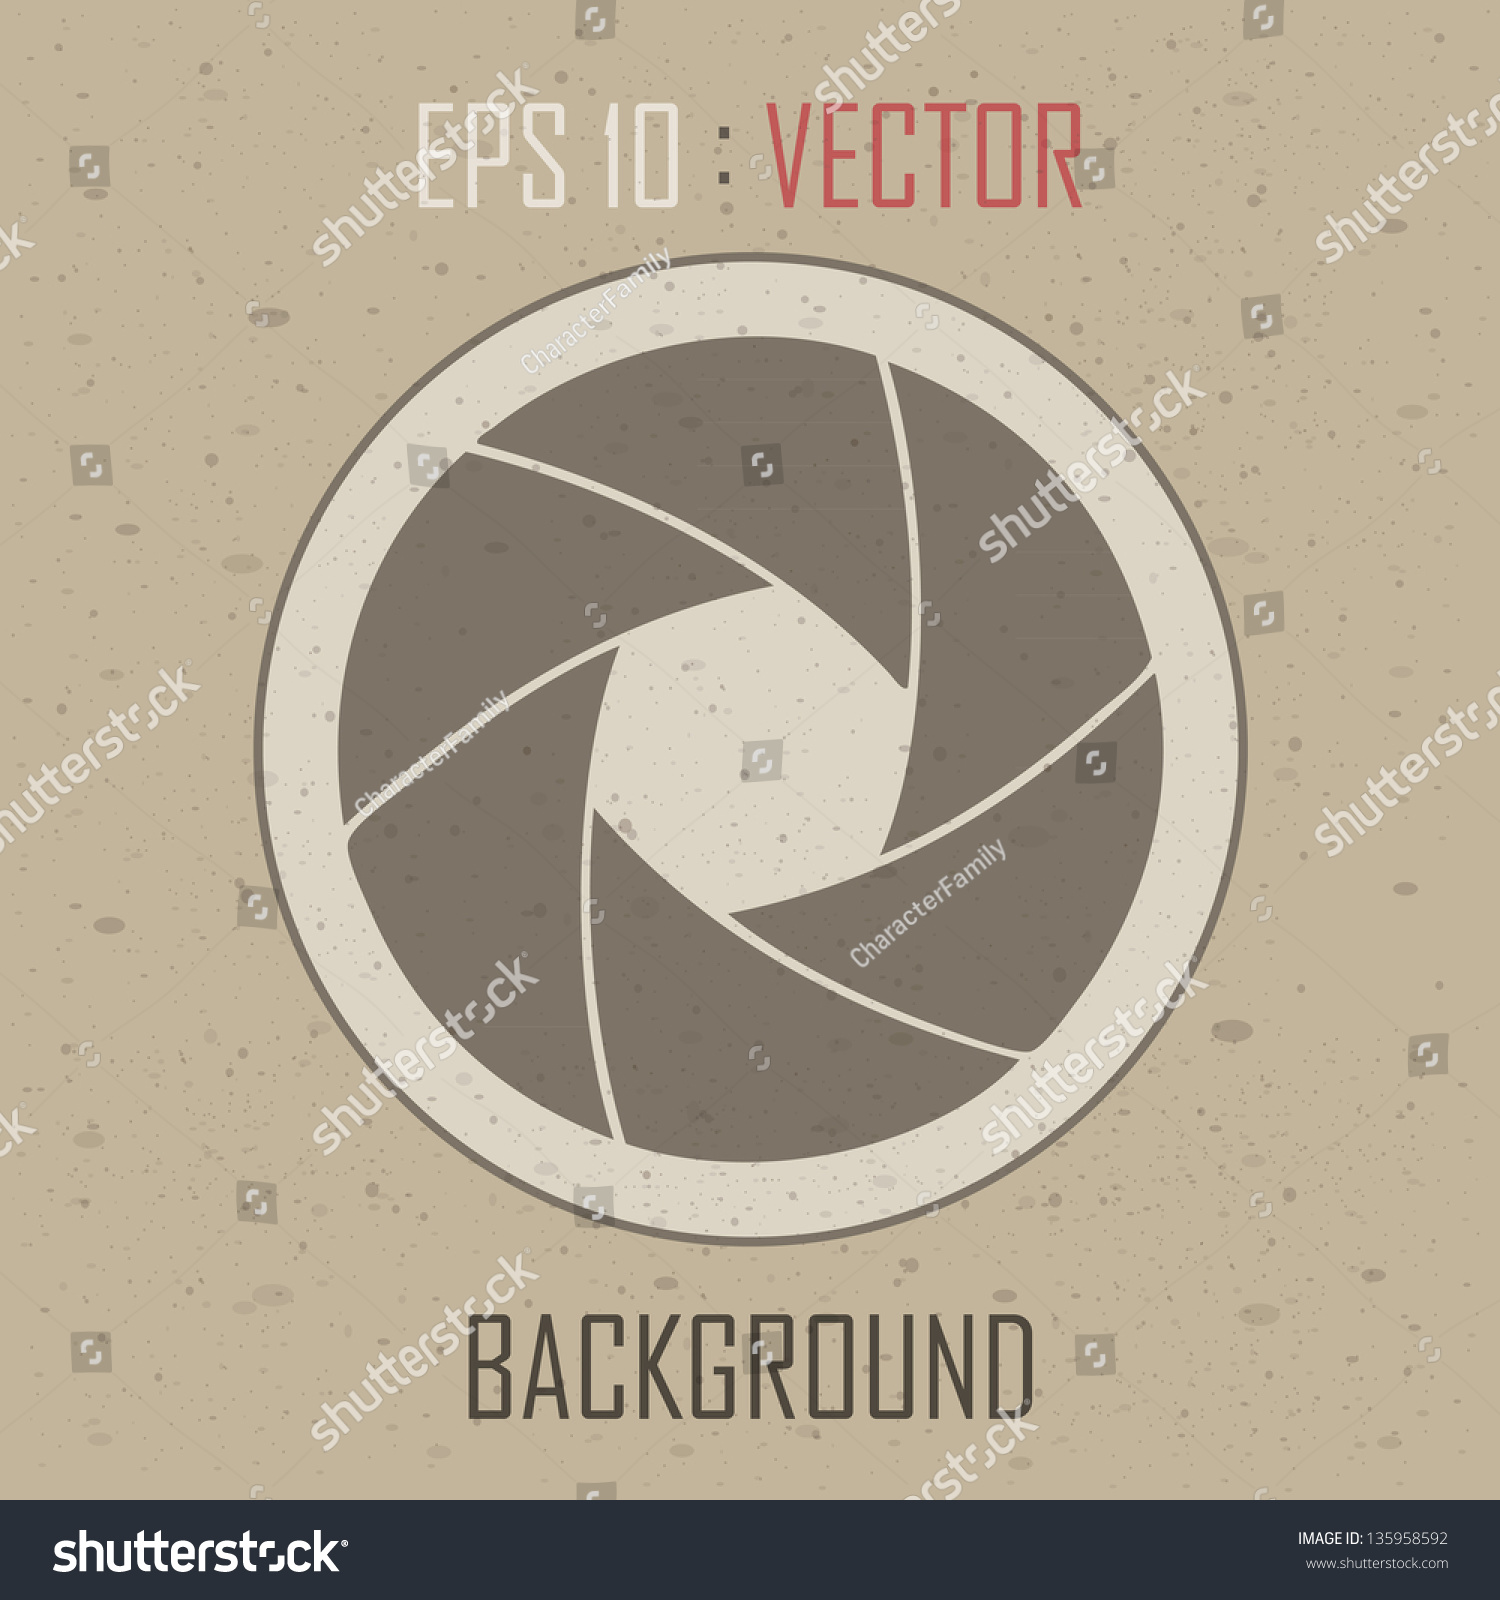 Lens Vector Stock Vector 135958592 - Shutterstock